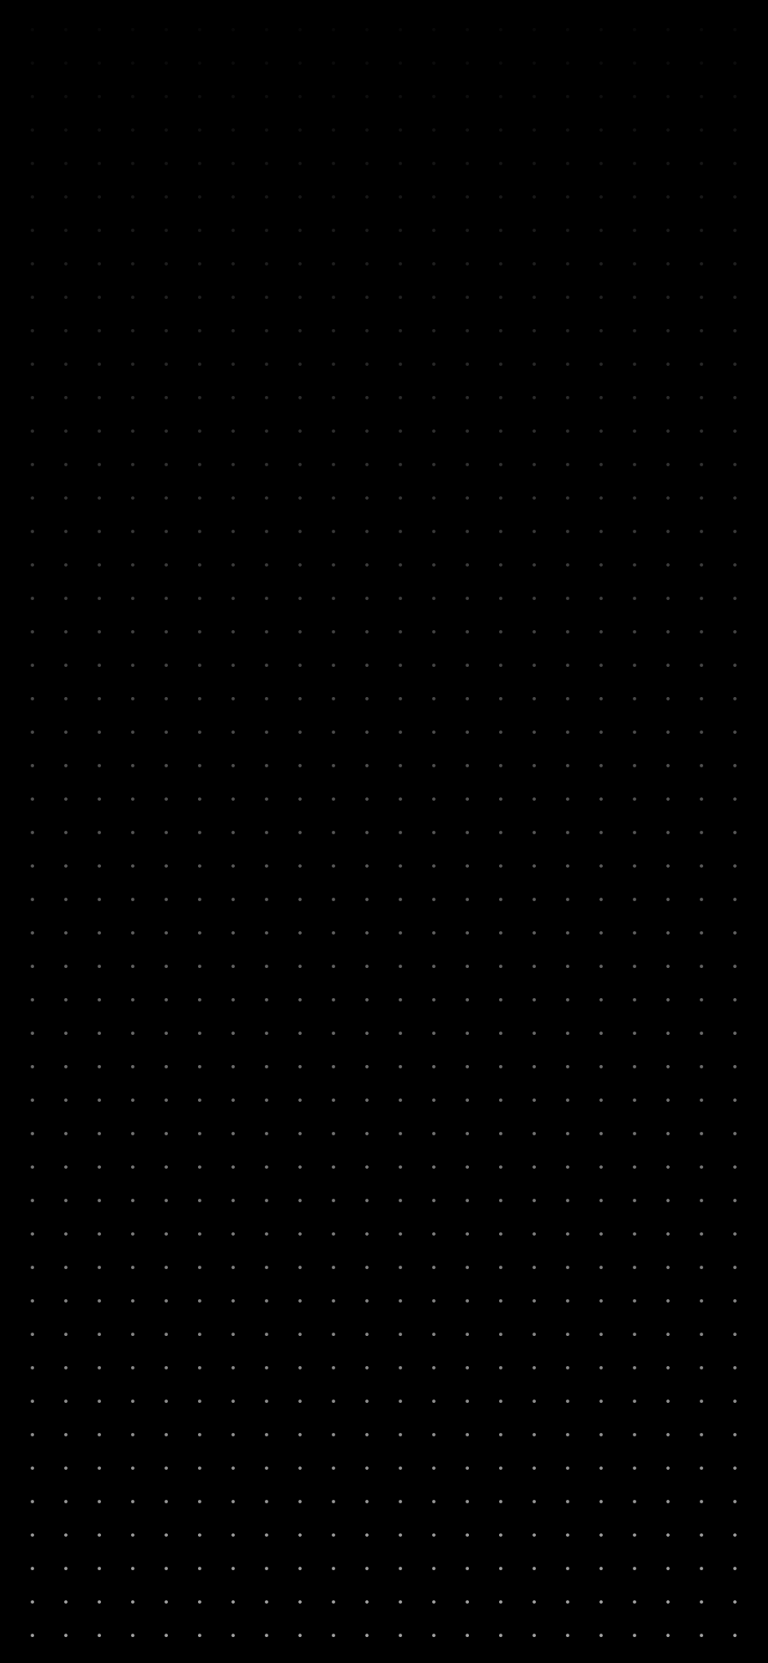 Dark pattern wallpaper. iPhone wallpaper pattern, Black wallpaper iphone, Grey wallpaper phone